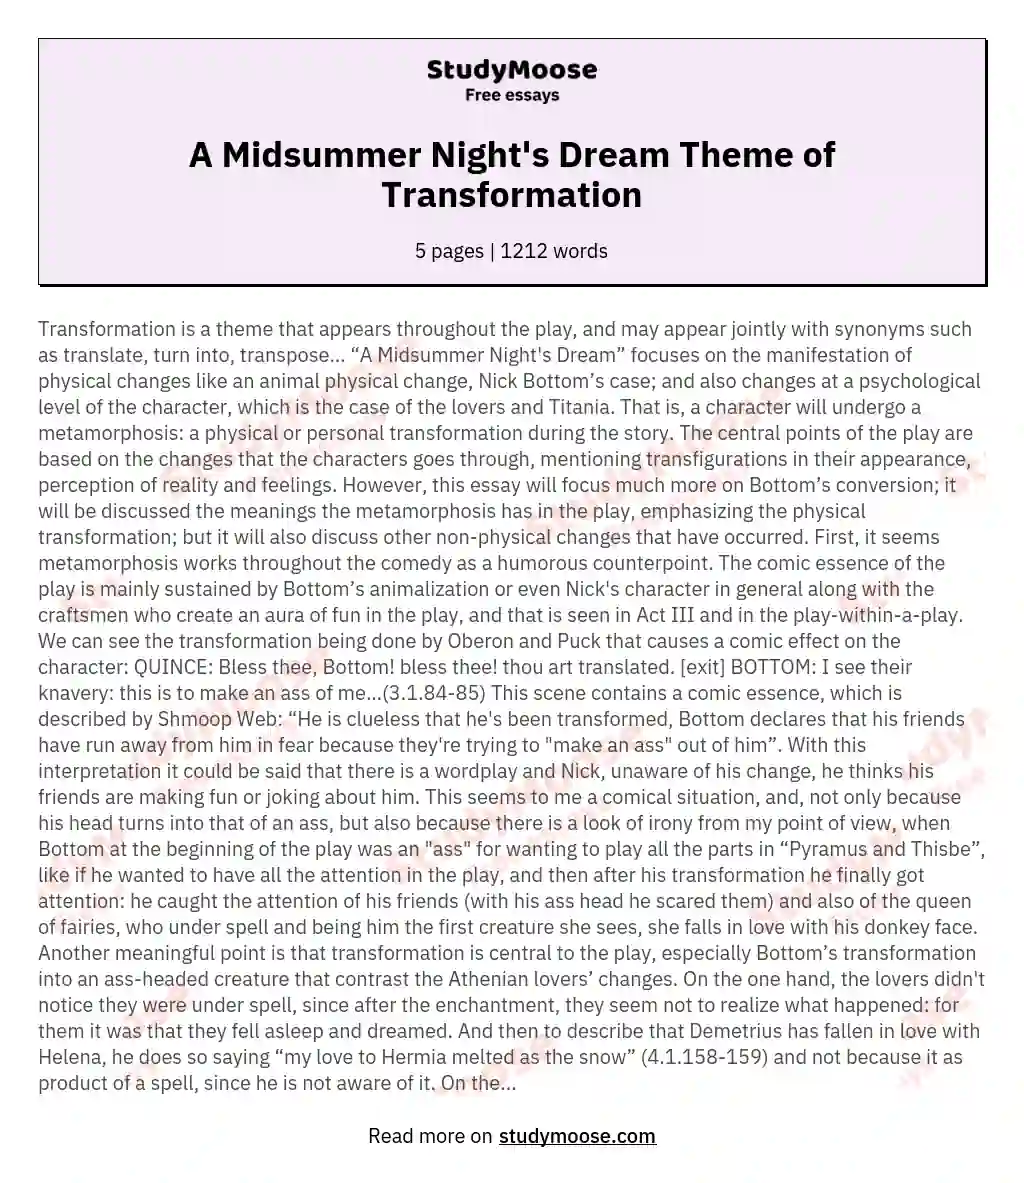 A Midsummer Night's Dream Theme of Transformation essay